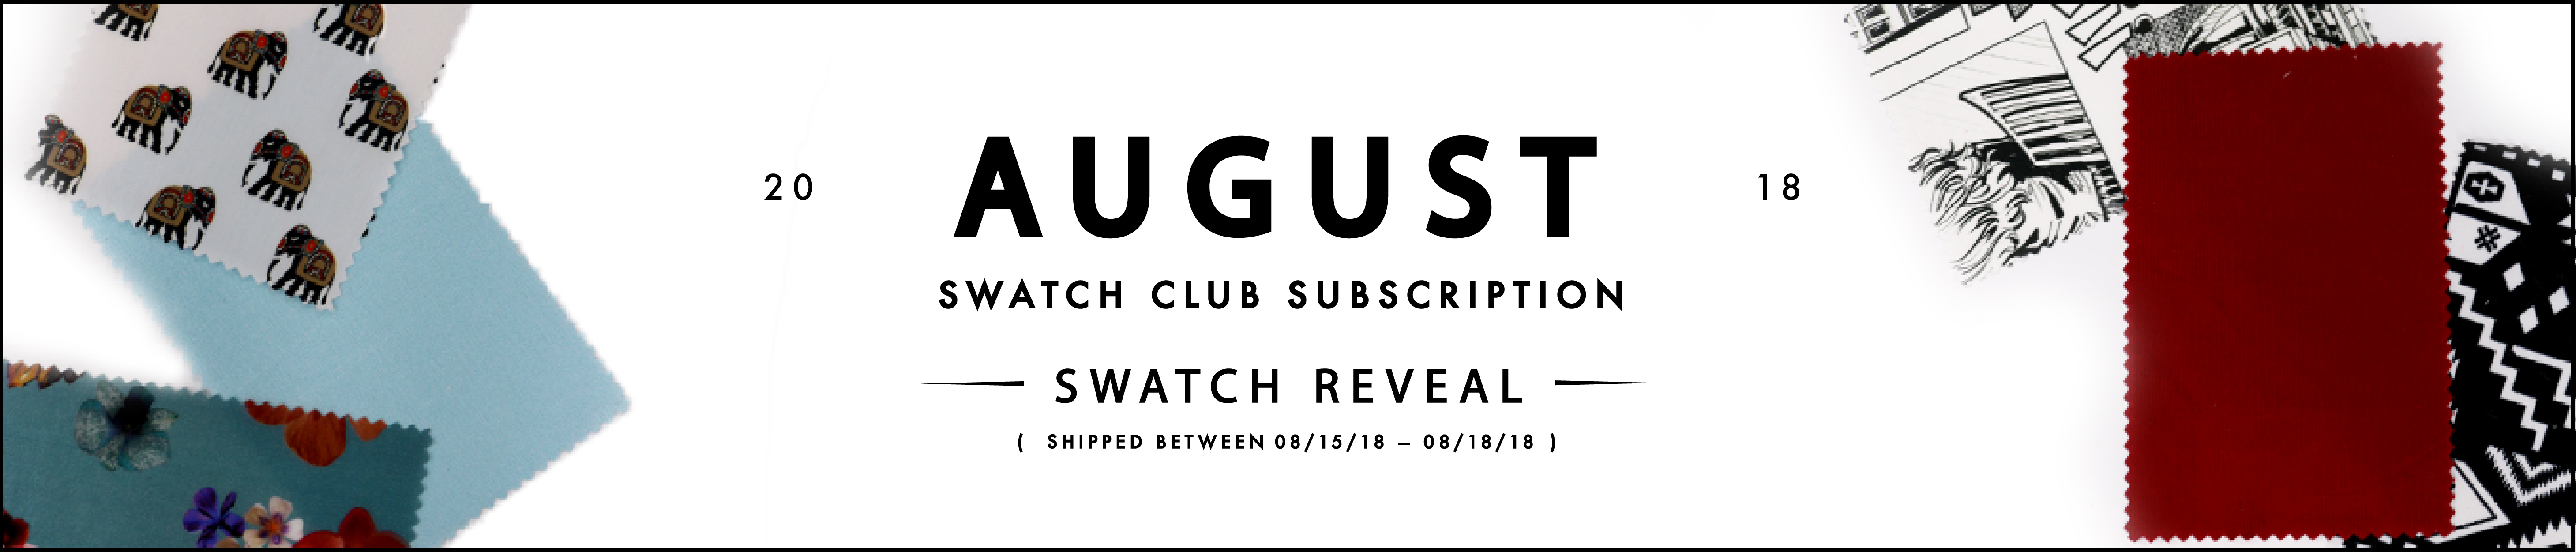 August Swatch Club